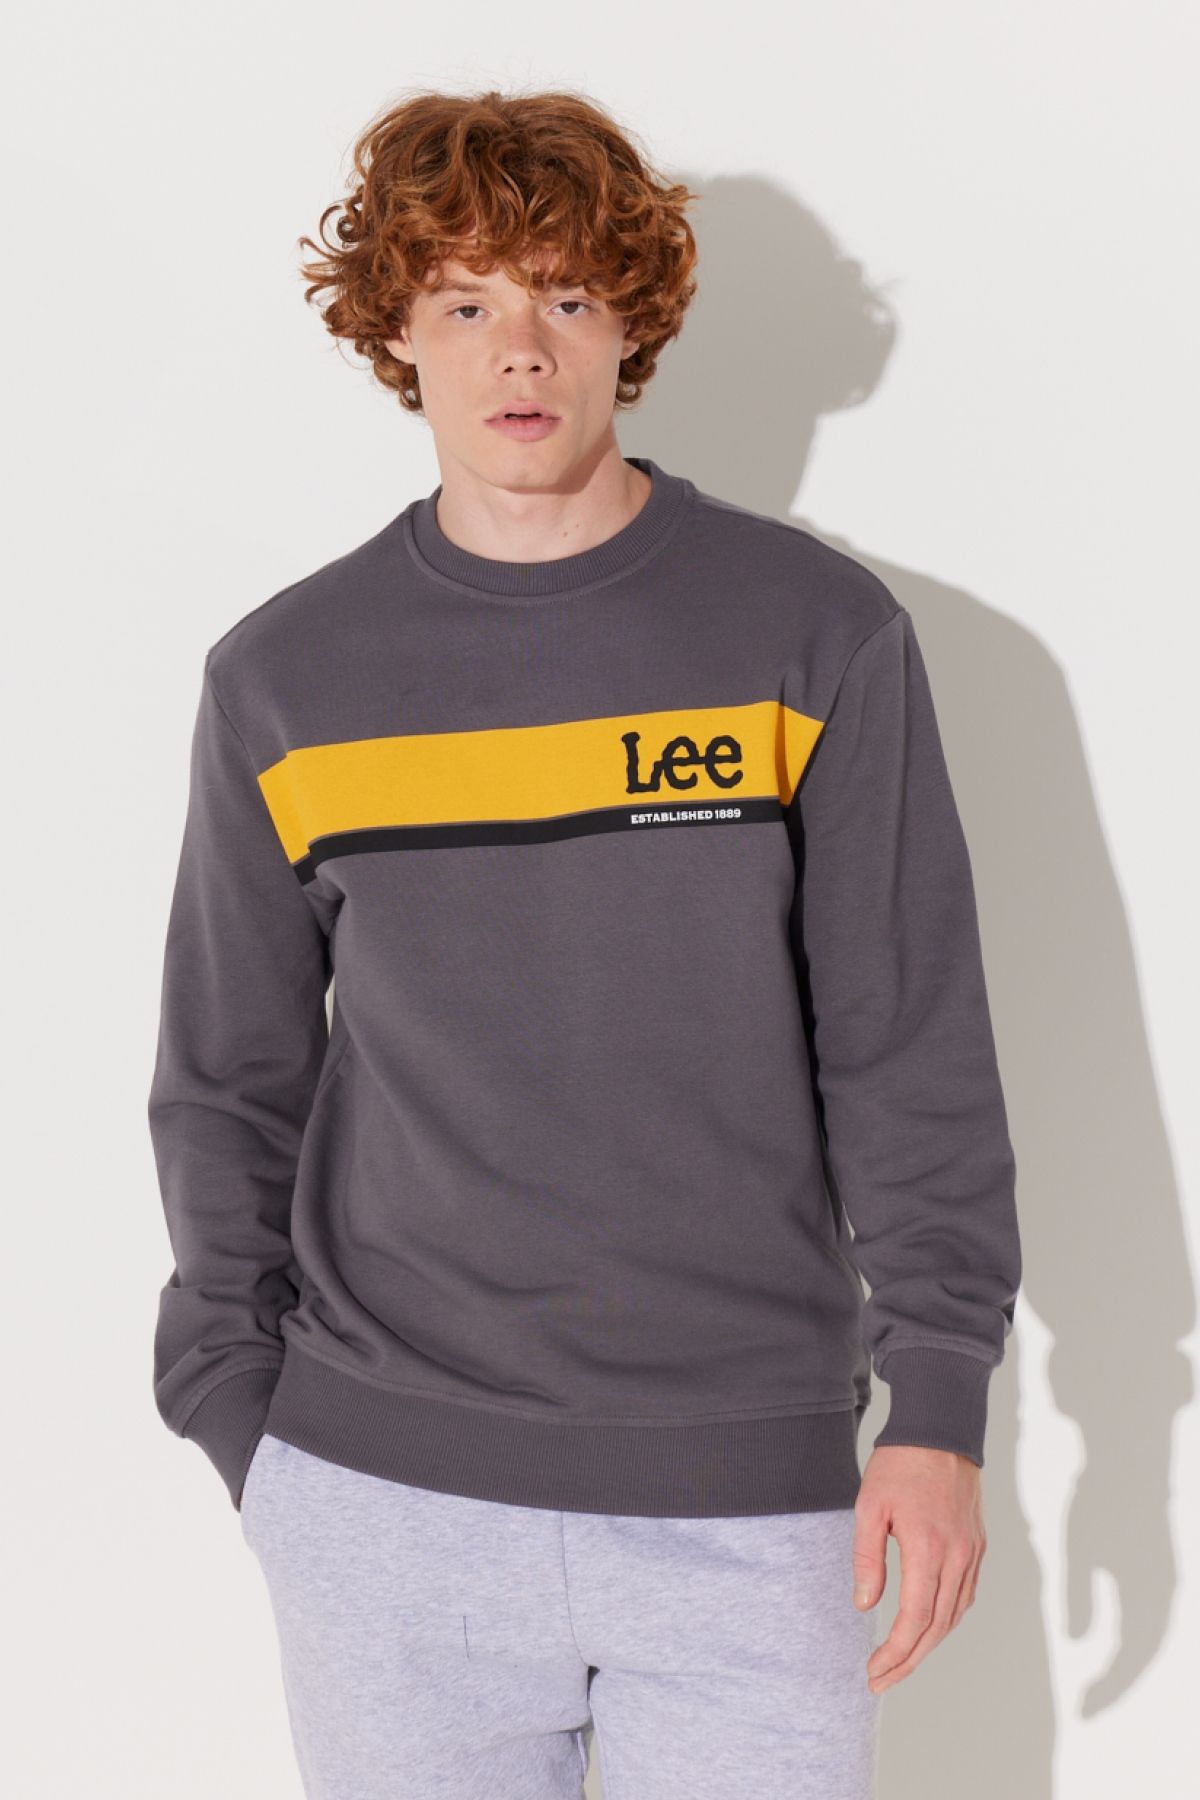 Lee Sweatshirt - Gray - Regular fit